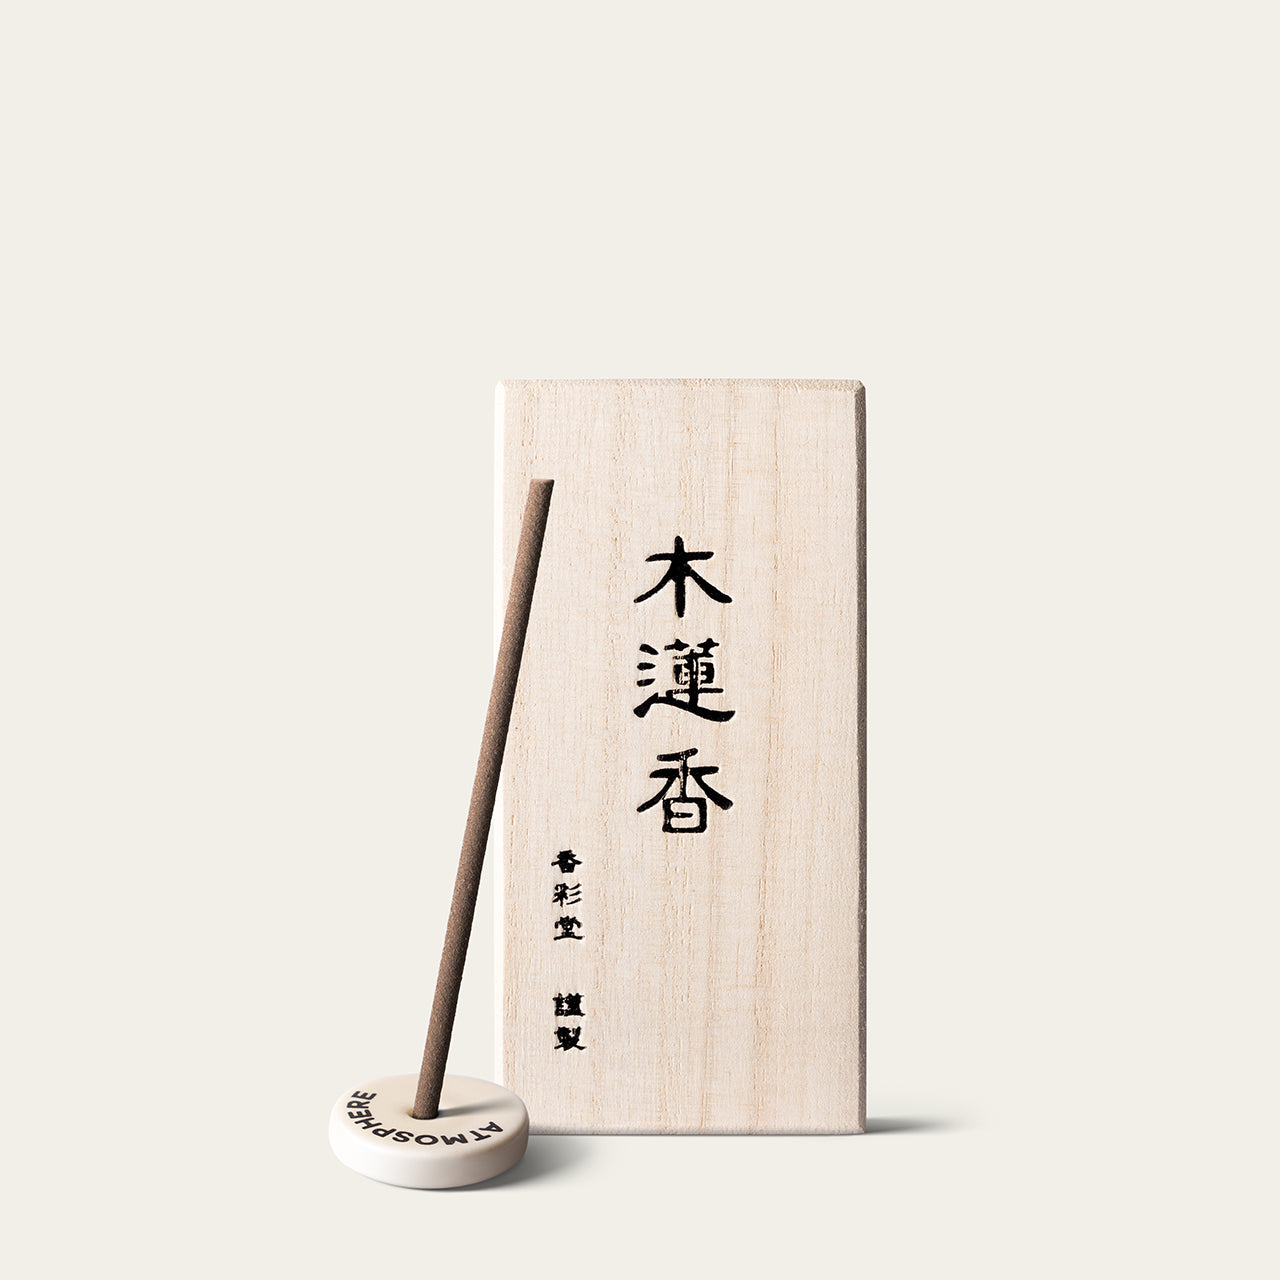 Kousaido Ancient City Magnolia Mokurenka Japanese incense sticks (30 sticks) with Atmosphere ceramic incense holder